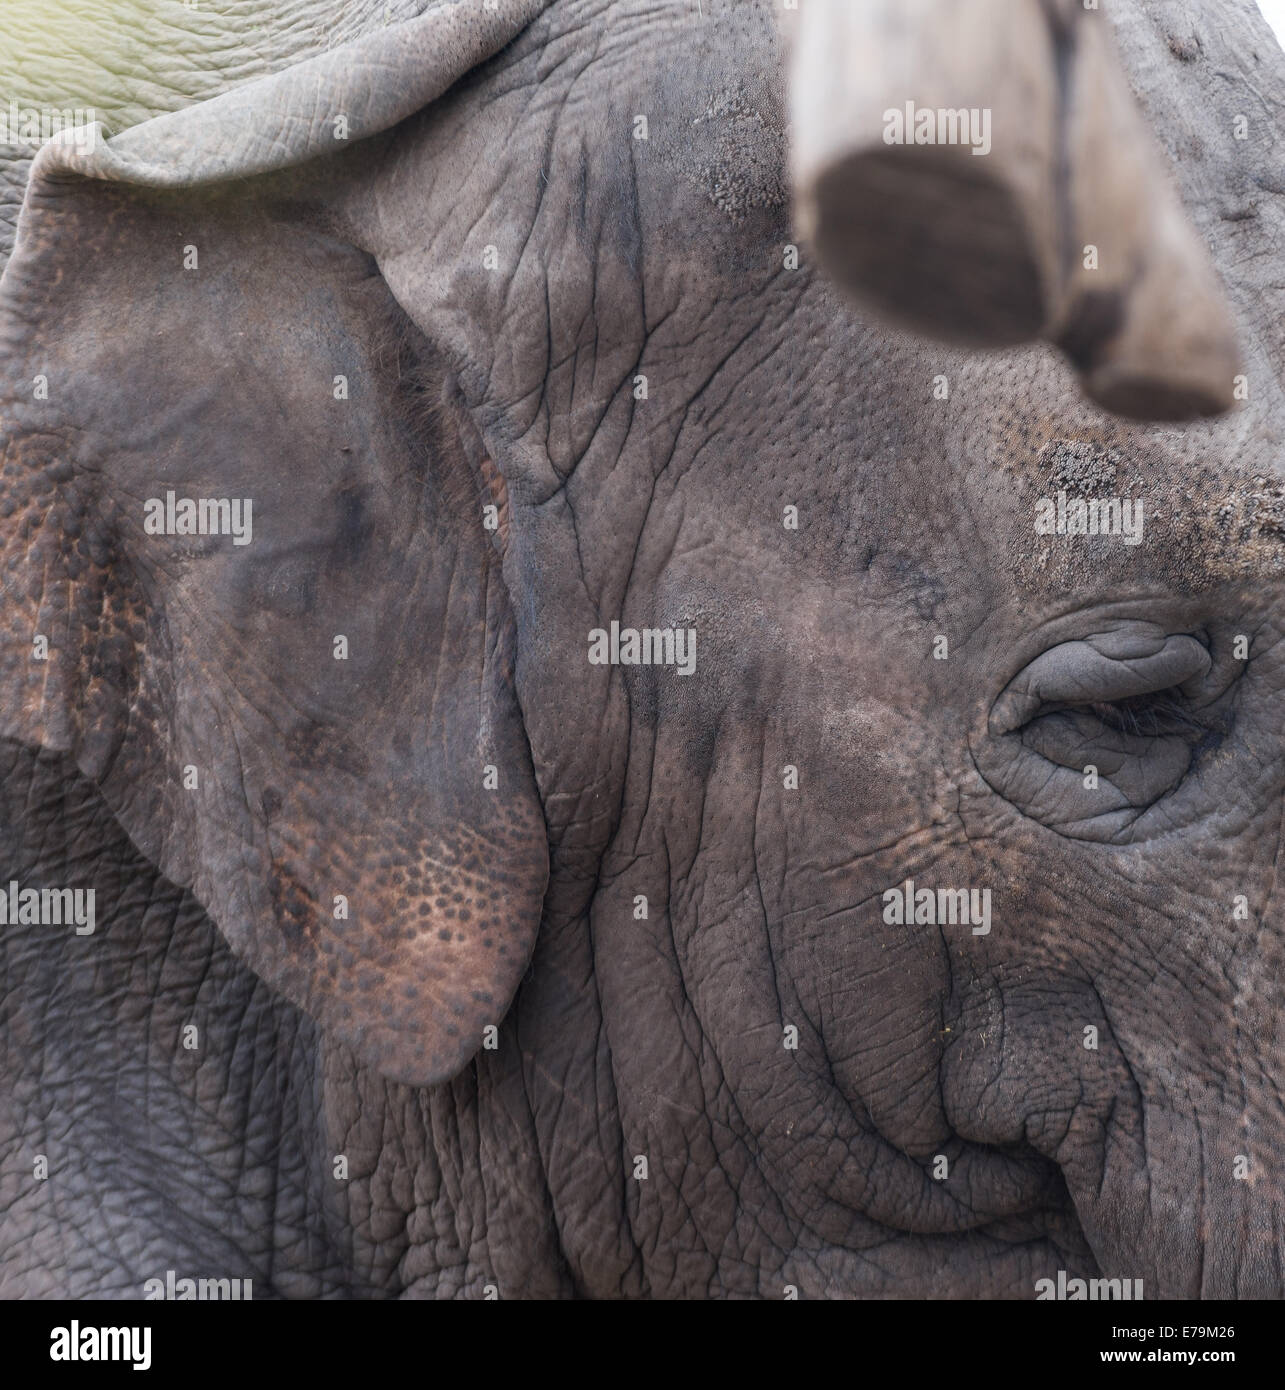 Very big elephant sad in the cage Stock Photo